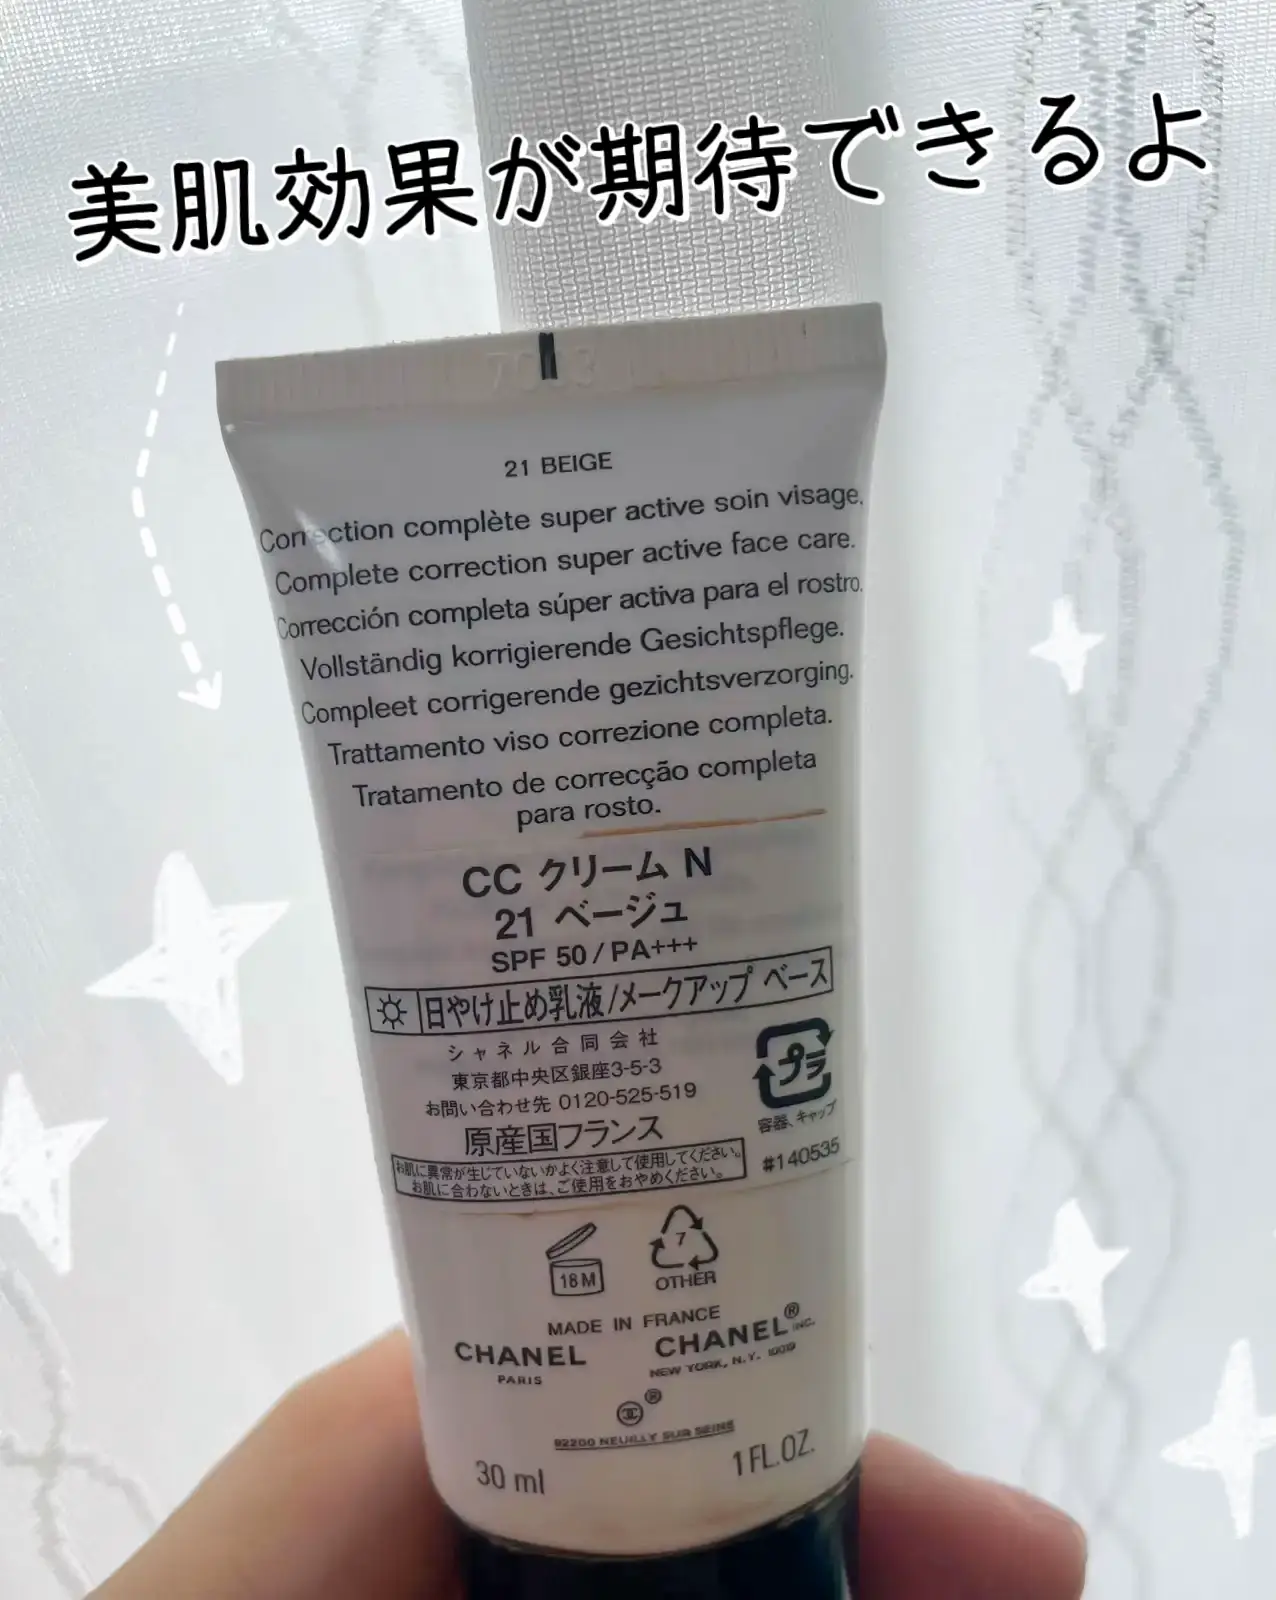 CHANEL CC Cream Super Active Complete Correction - 1 oz for sale online